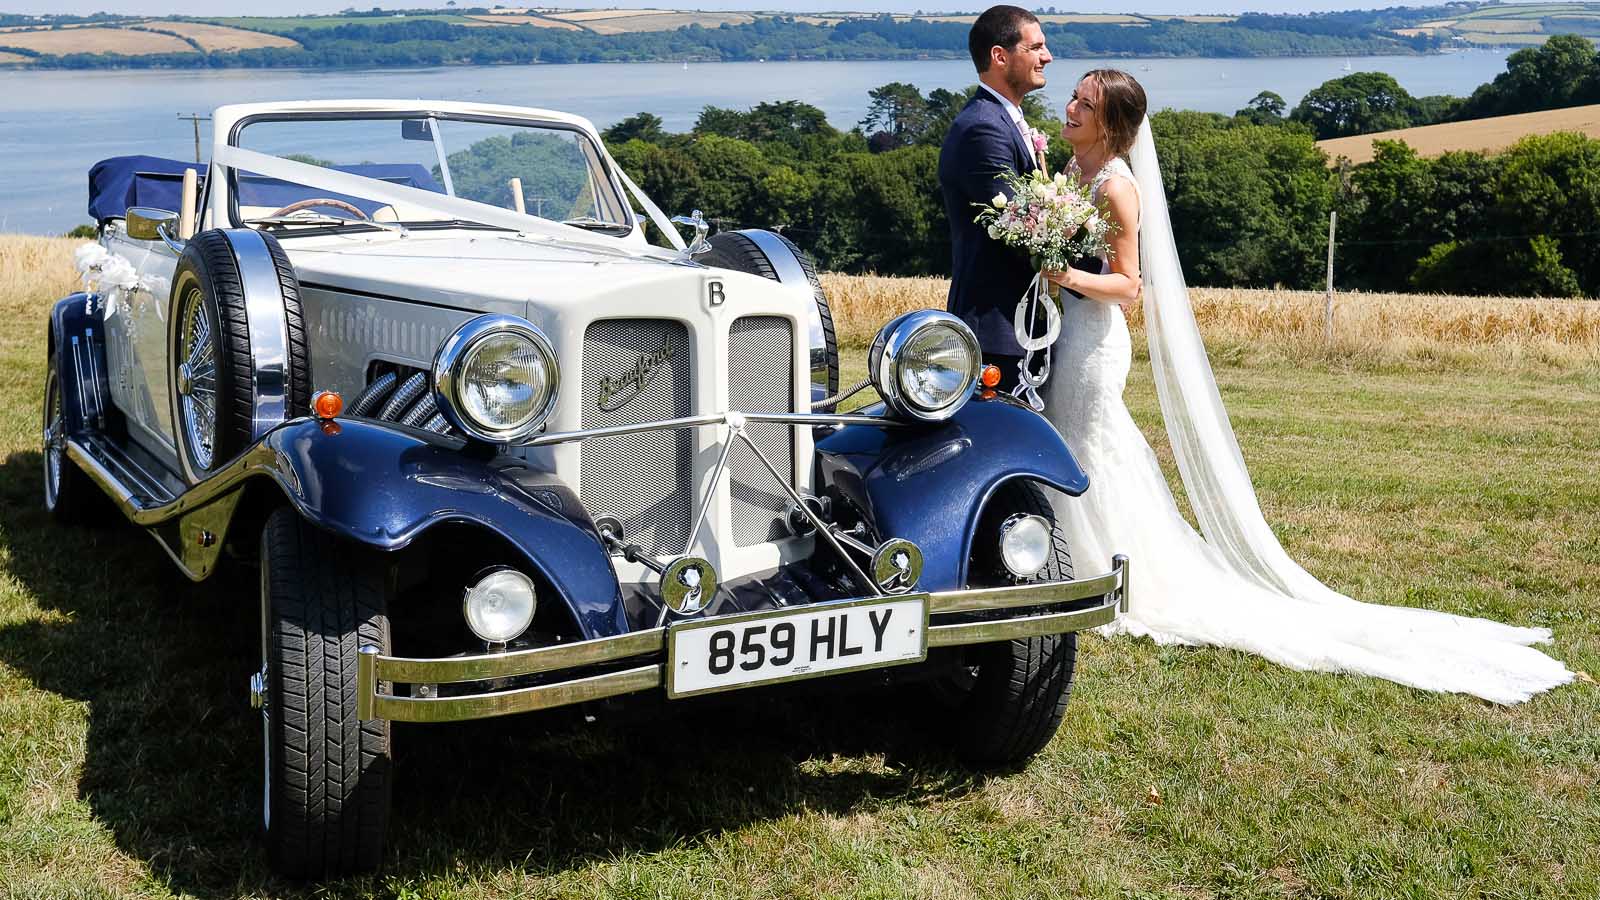 Beauford 4 Door Convertible wedding car for hire in Maidstone, Kent